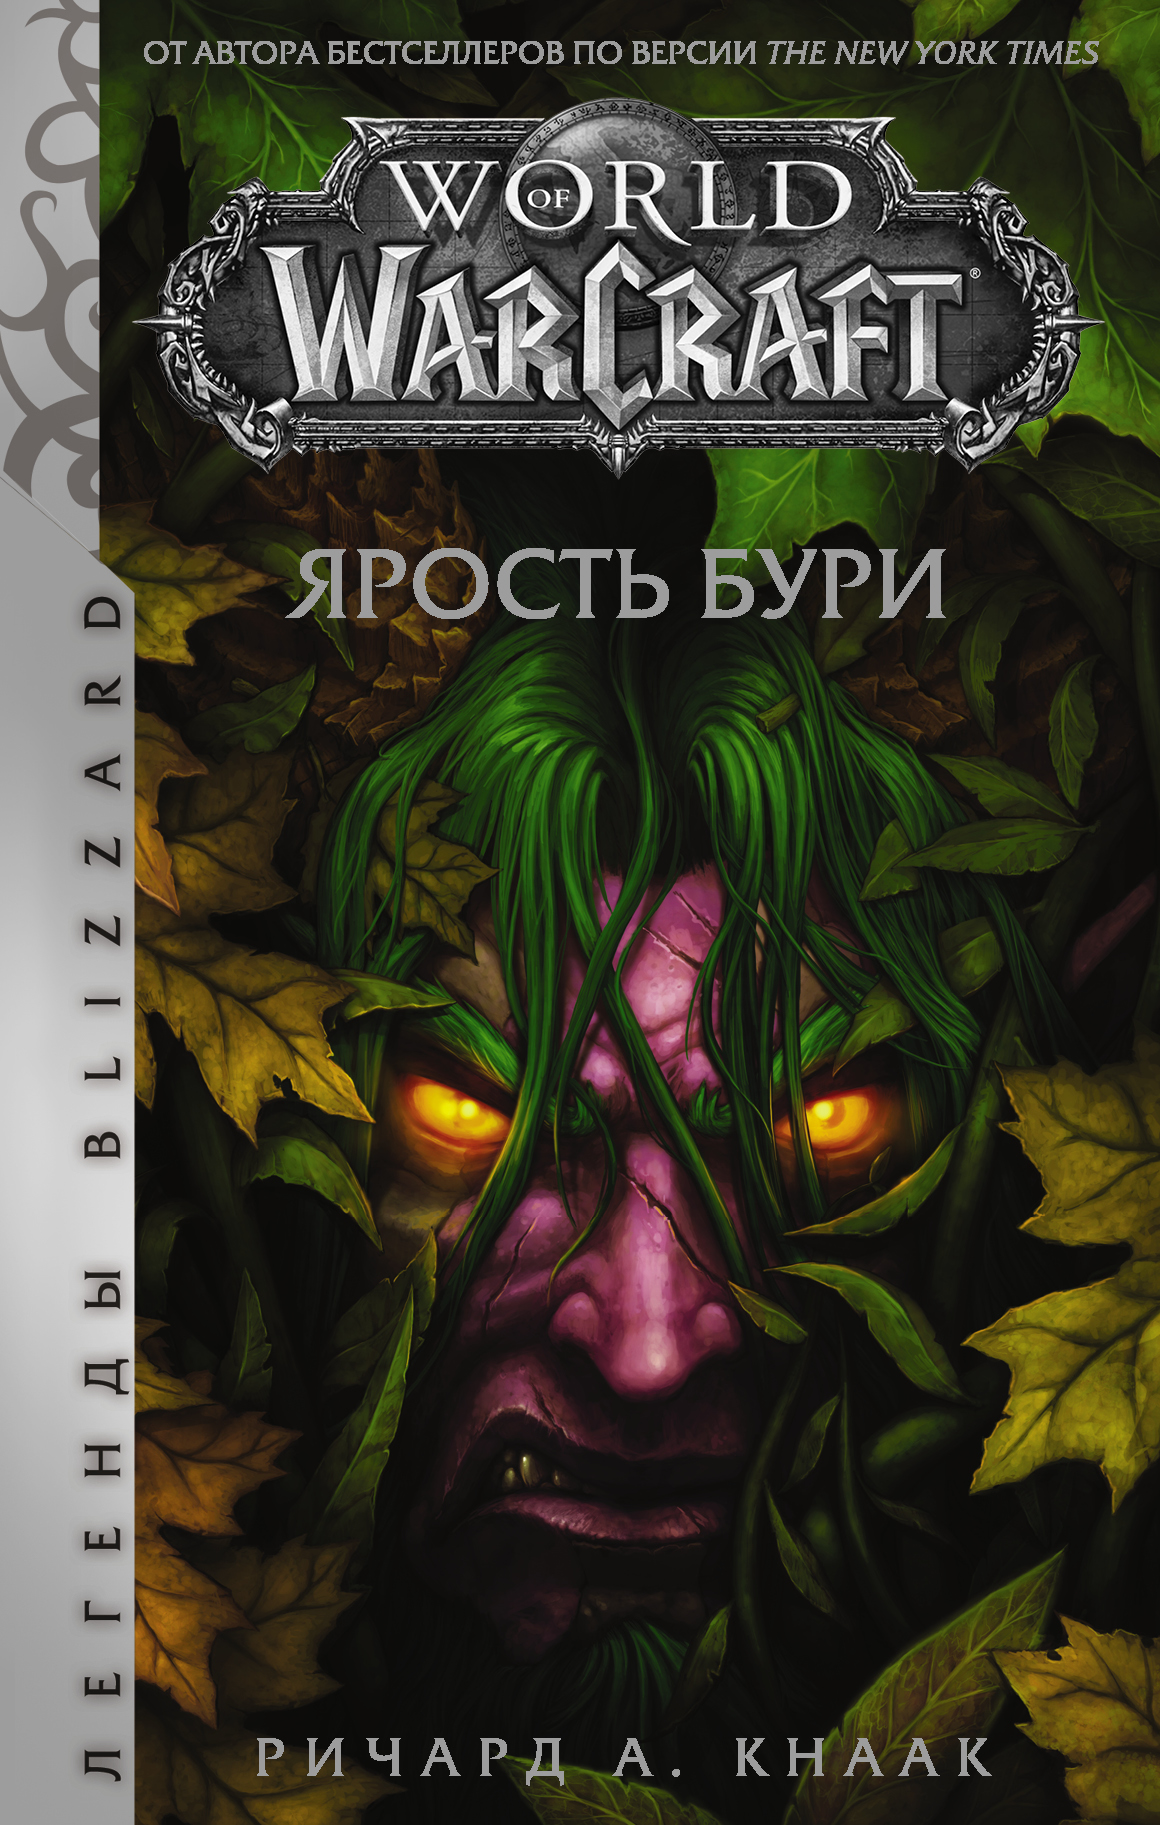 World of Warcraft:  